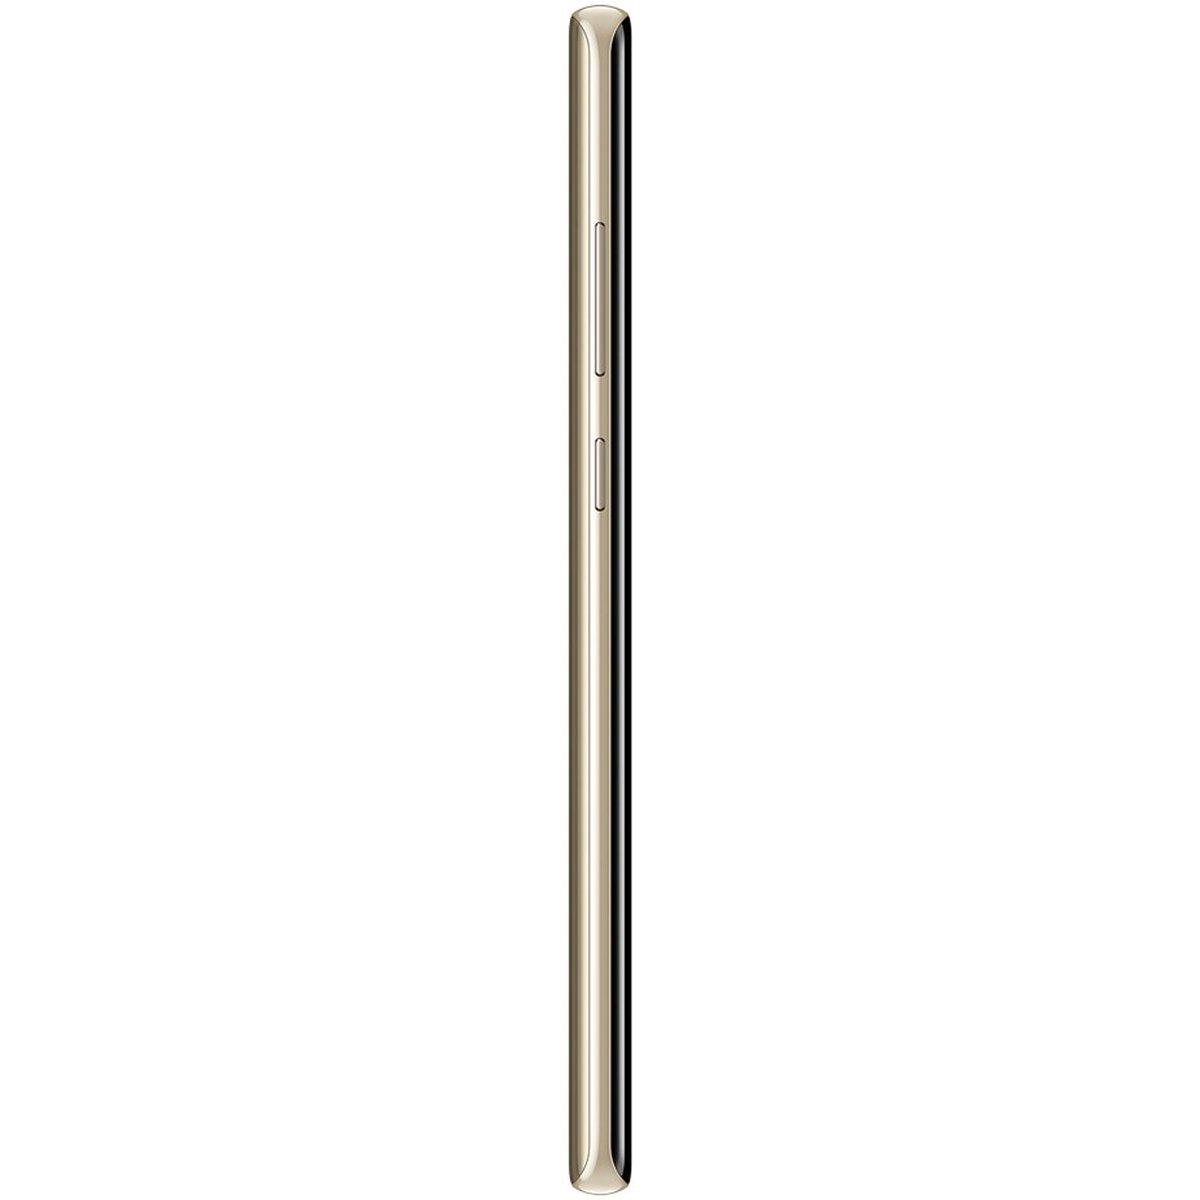 Samsung Galaxy Note8-SMN950F Maple Gold